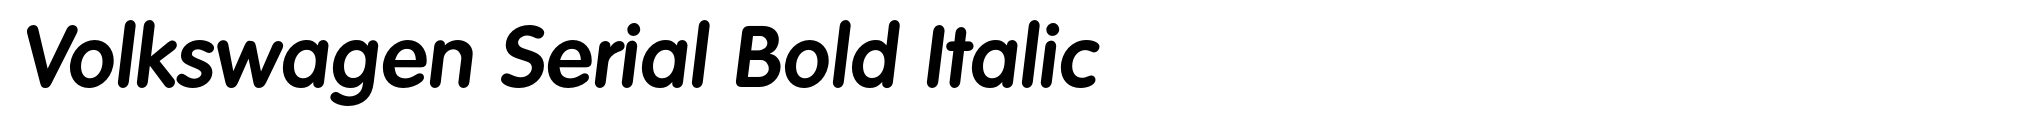 Volkswagen Serial Bold Italic image